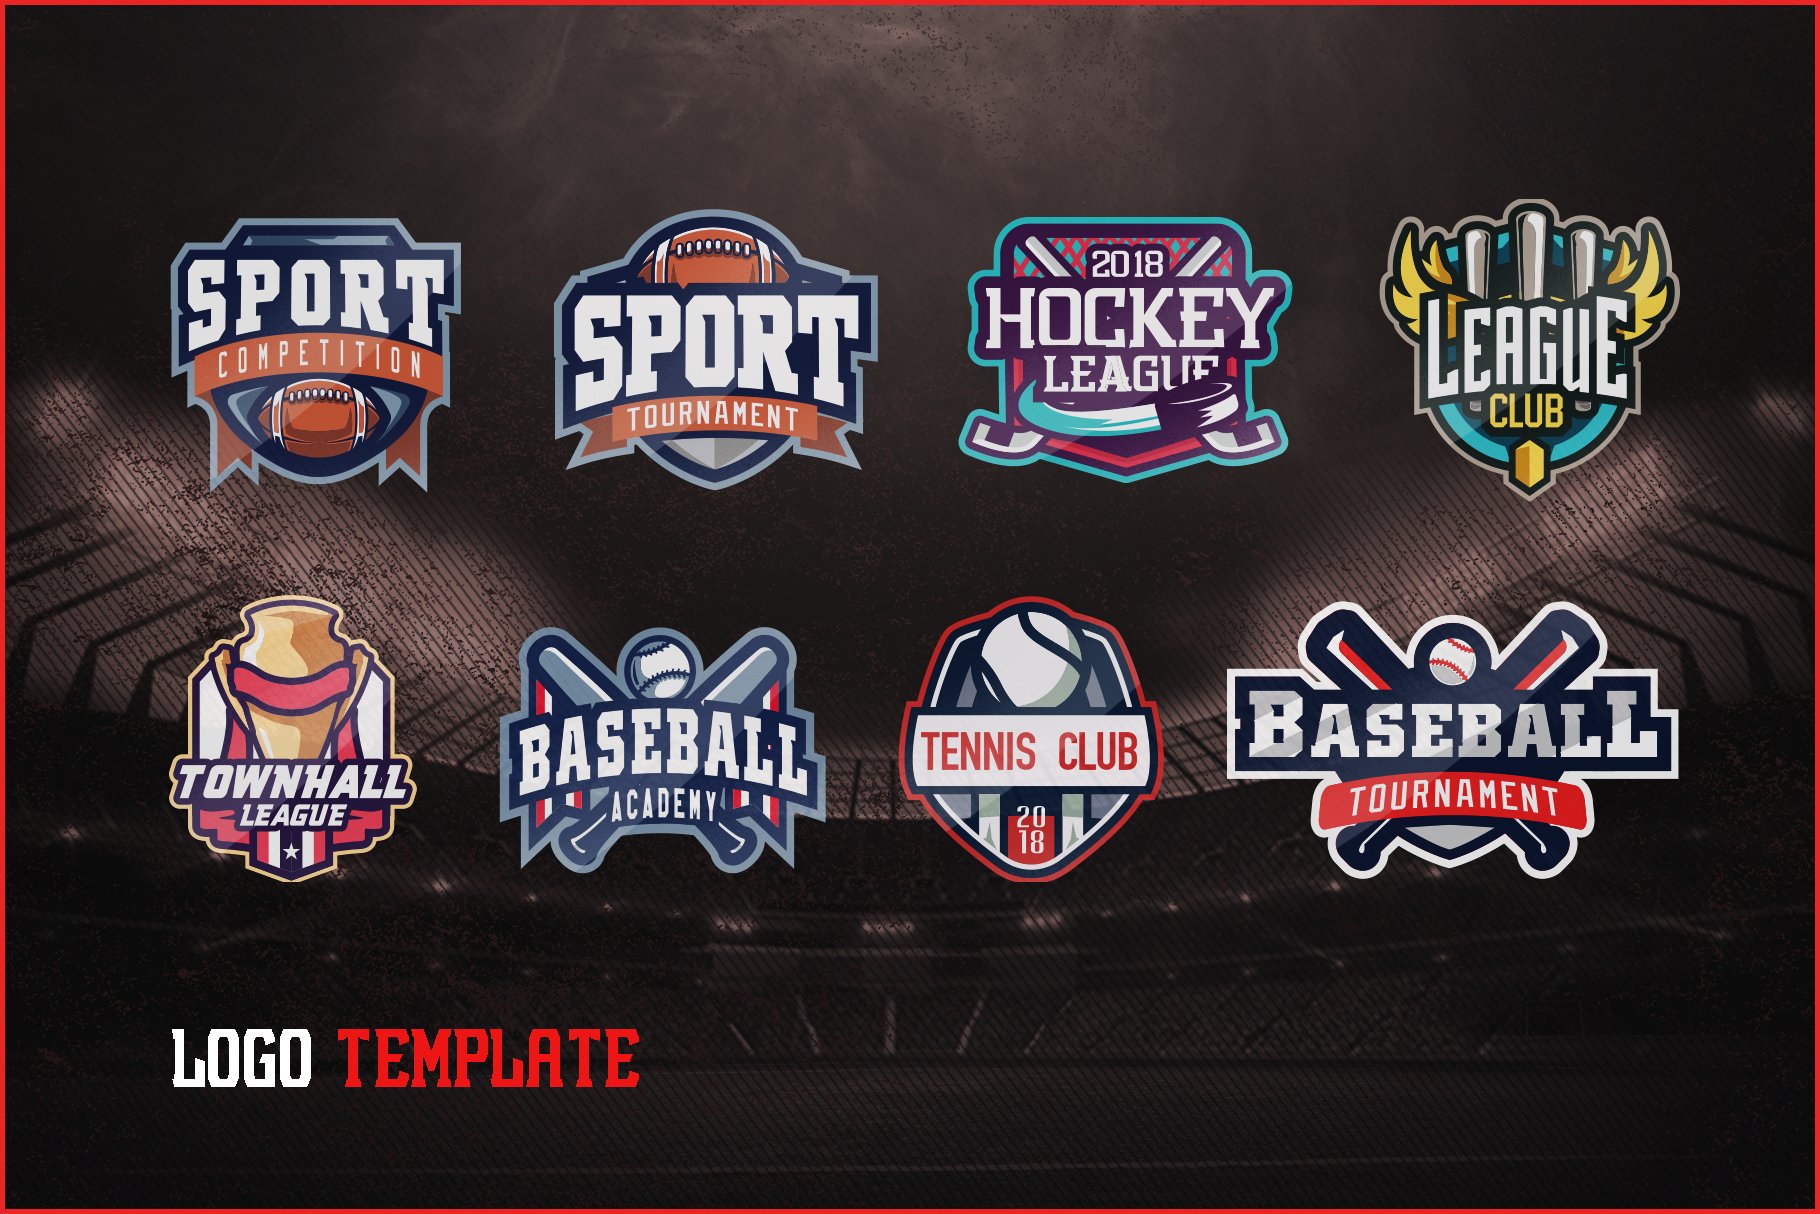 Diverse of ready sport logos.